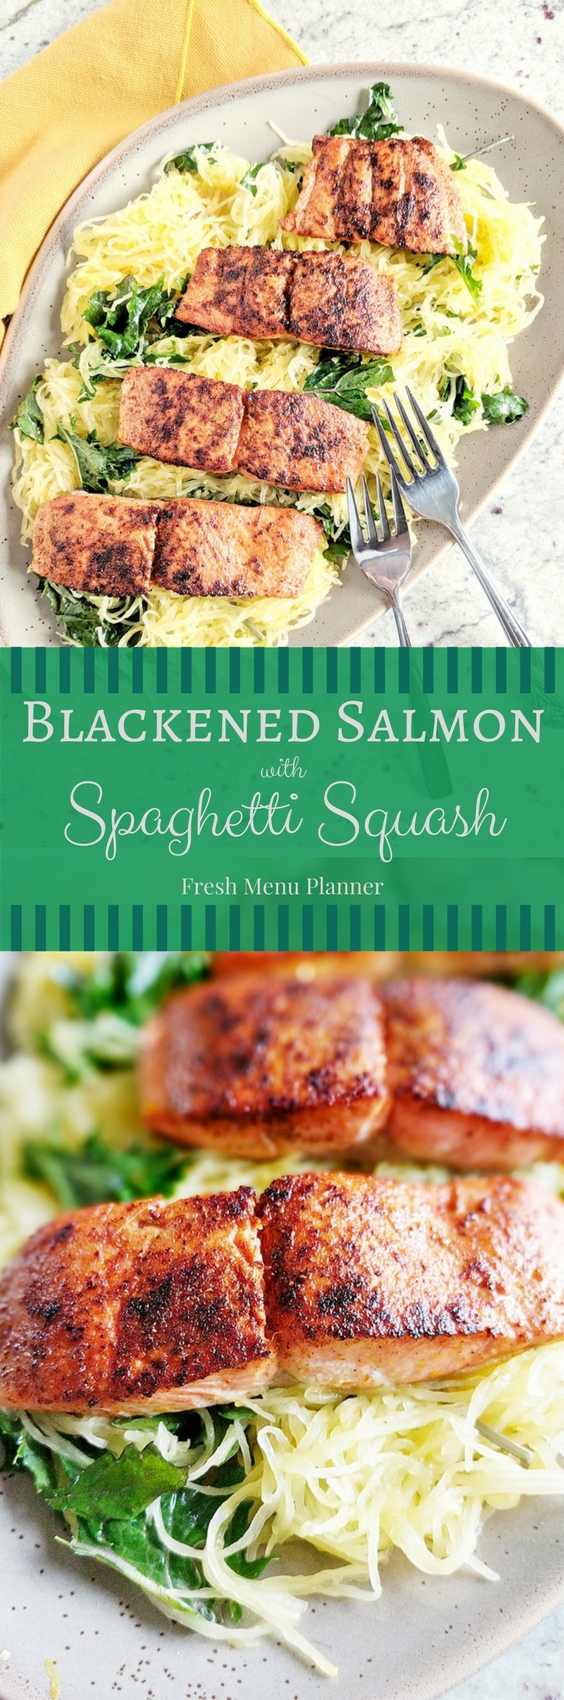 Blackened Salmon and Spaghetti Squash